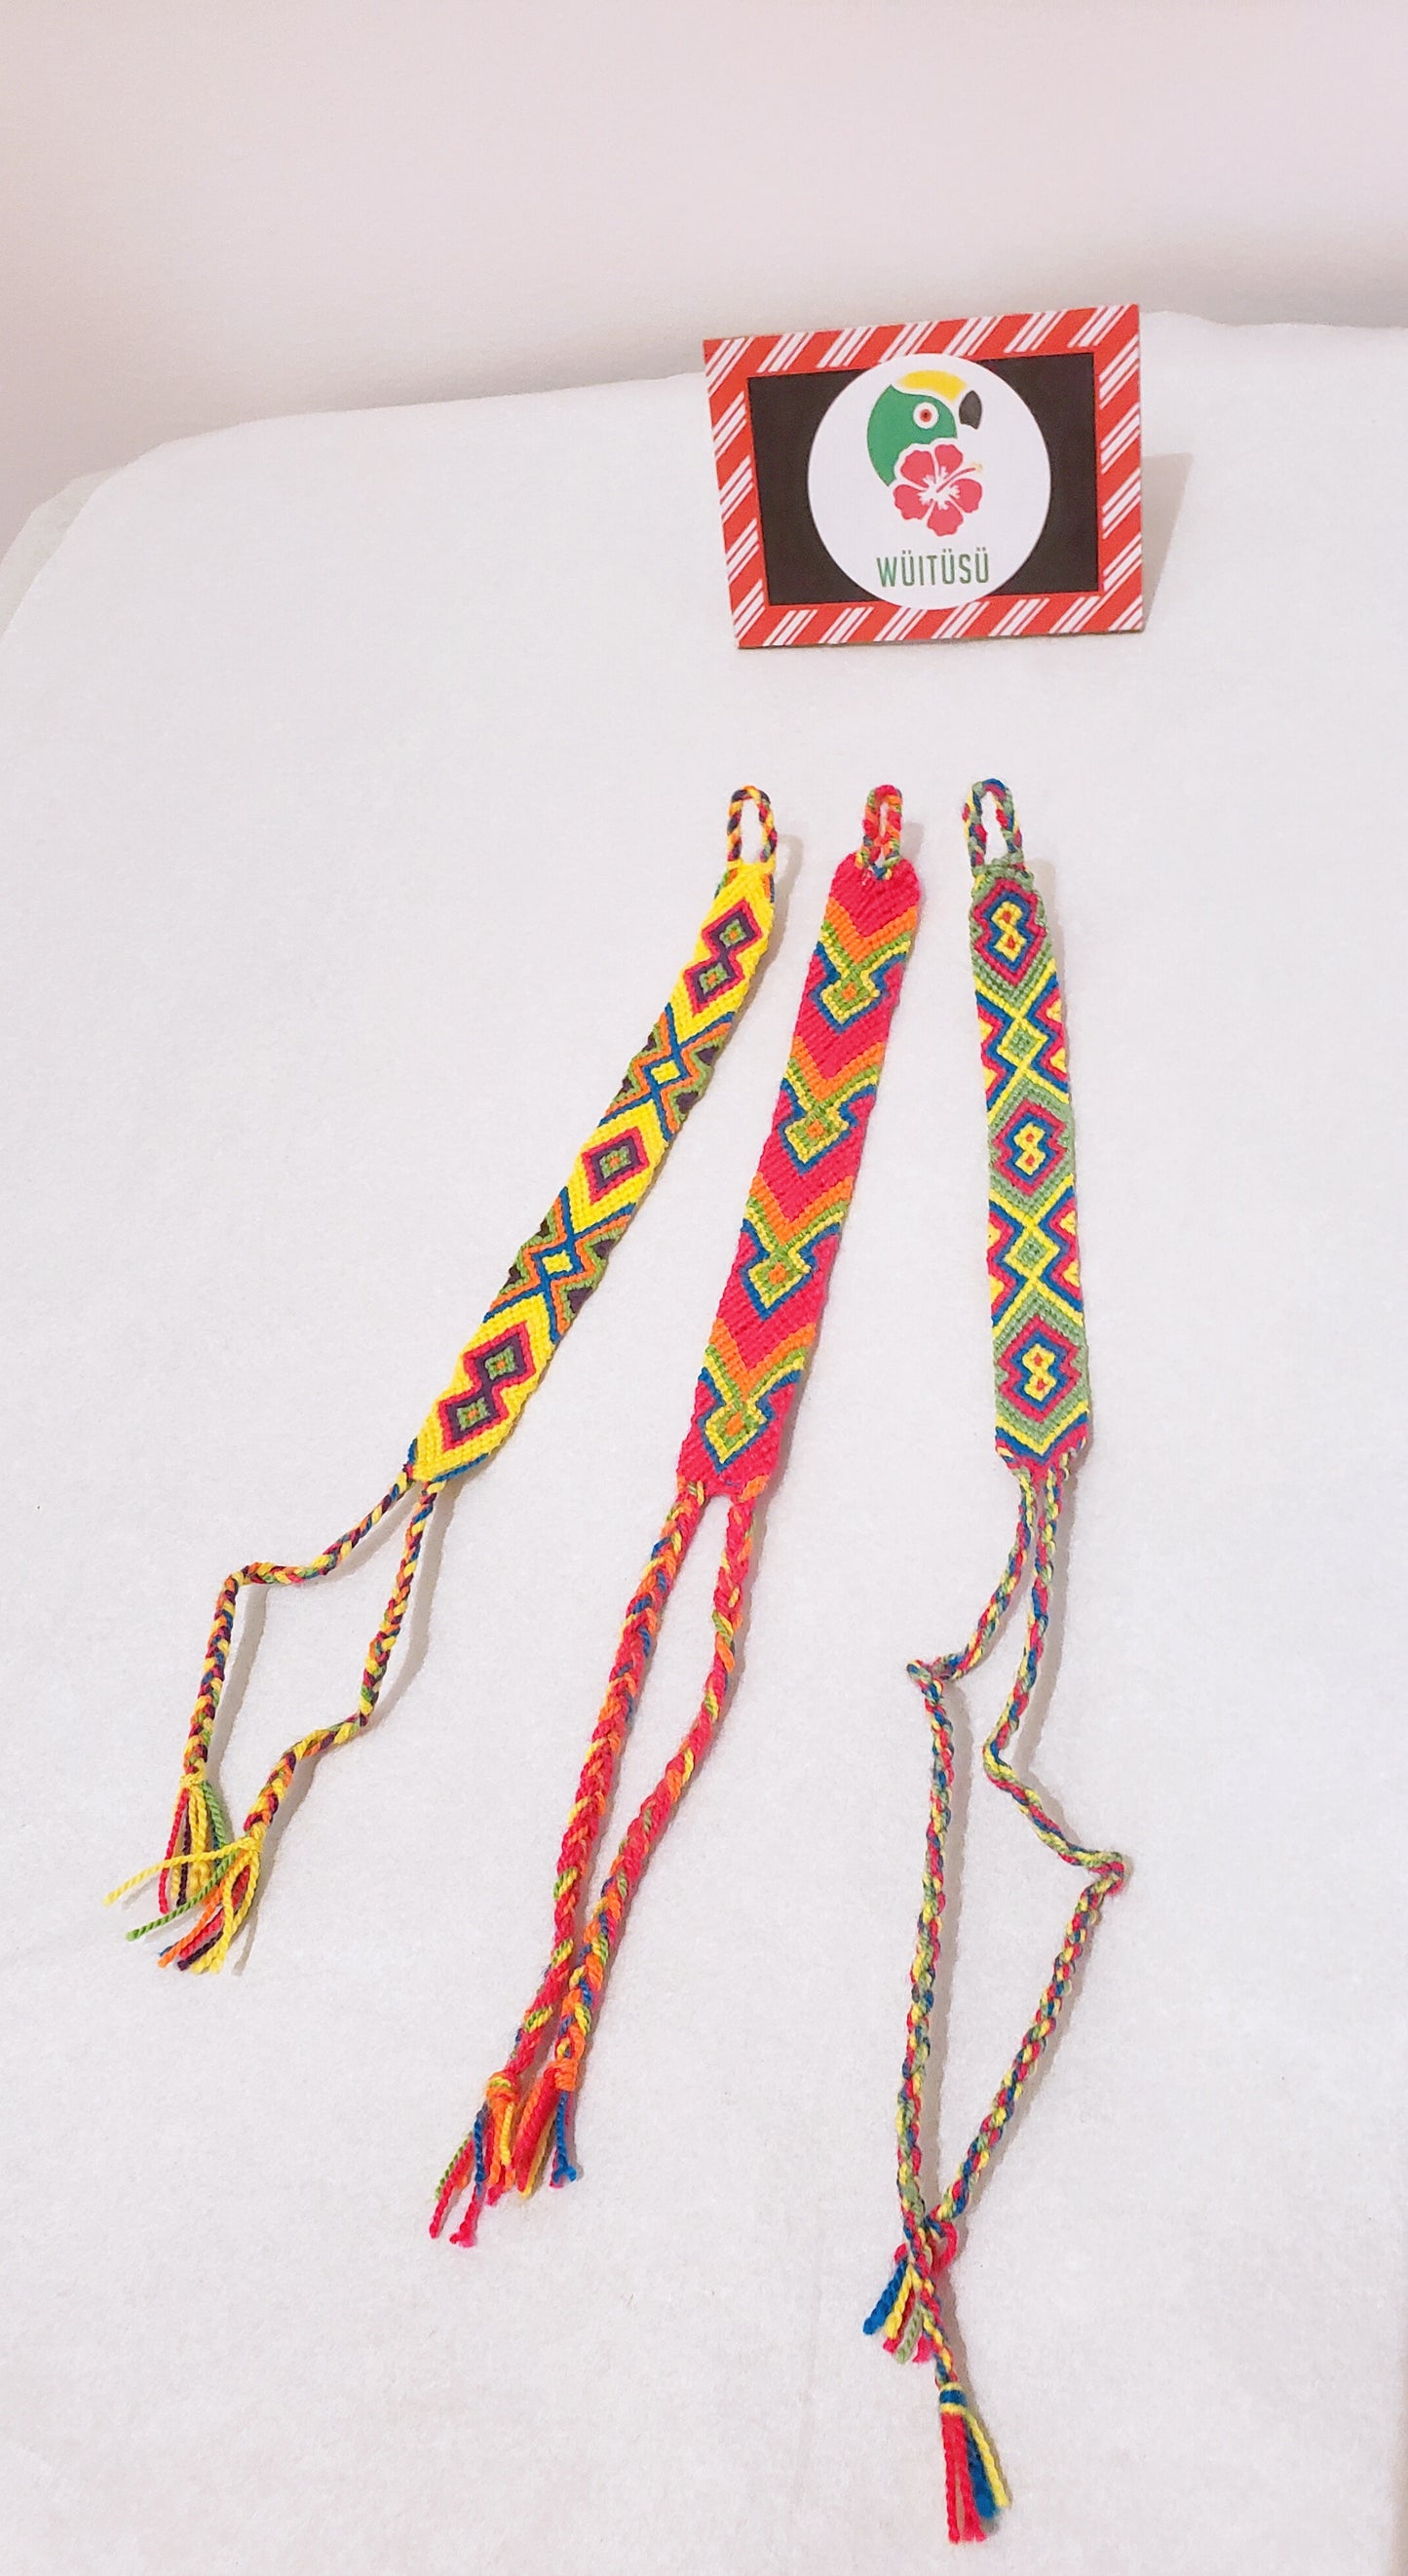 Pack of Three Neon Wayuu Handmade Bracelets - Wuitusu